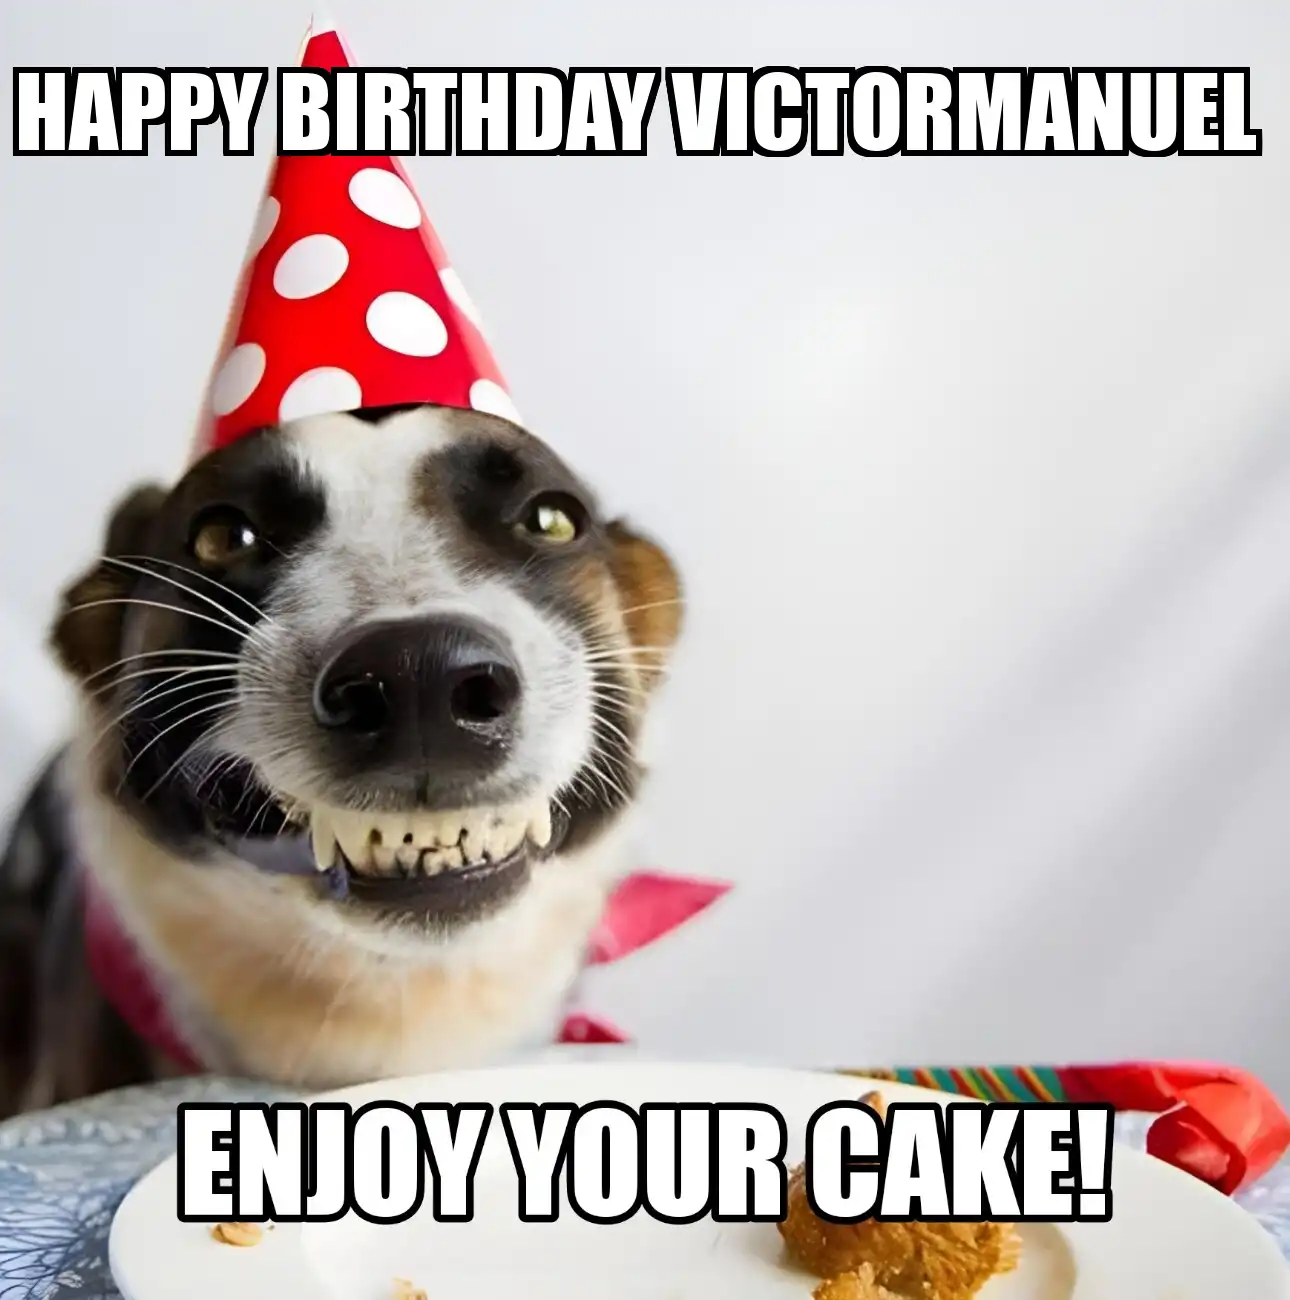 Happy Birthday Victormanuel Enjoy Your Cake Dog Meme